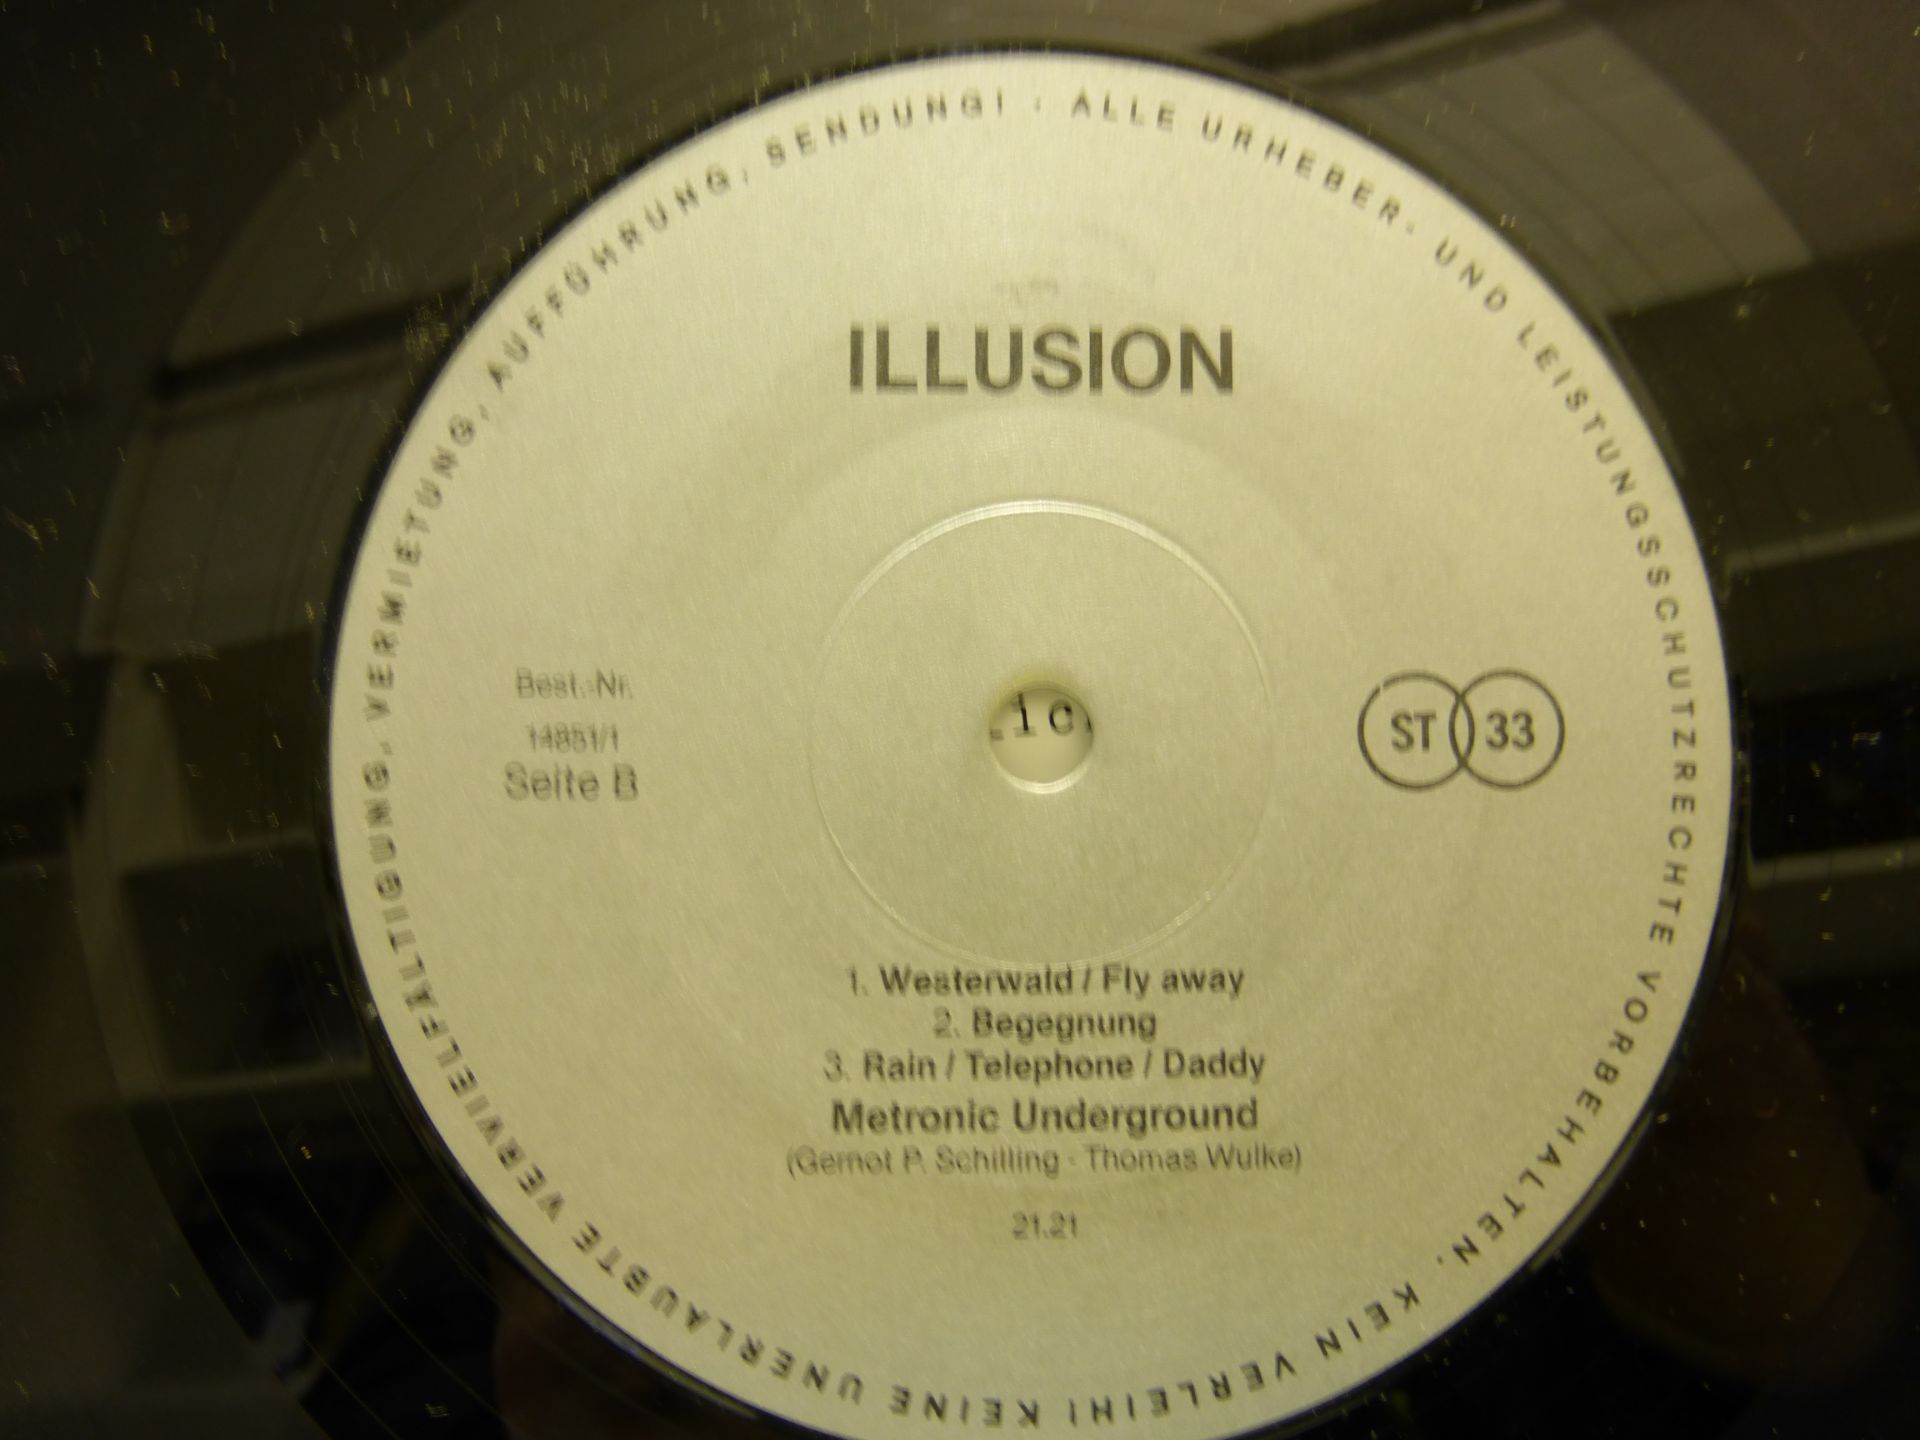 Metronic Underground 'Illusion' LP - Image 5 of 6